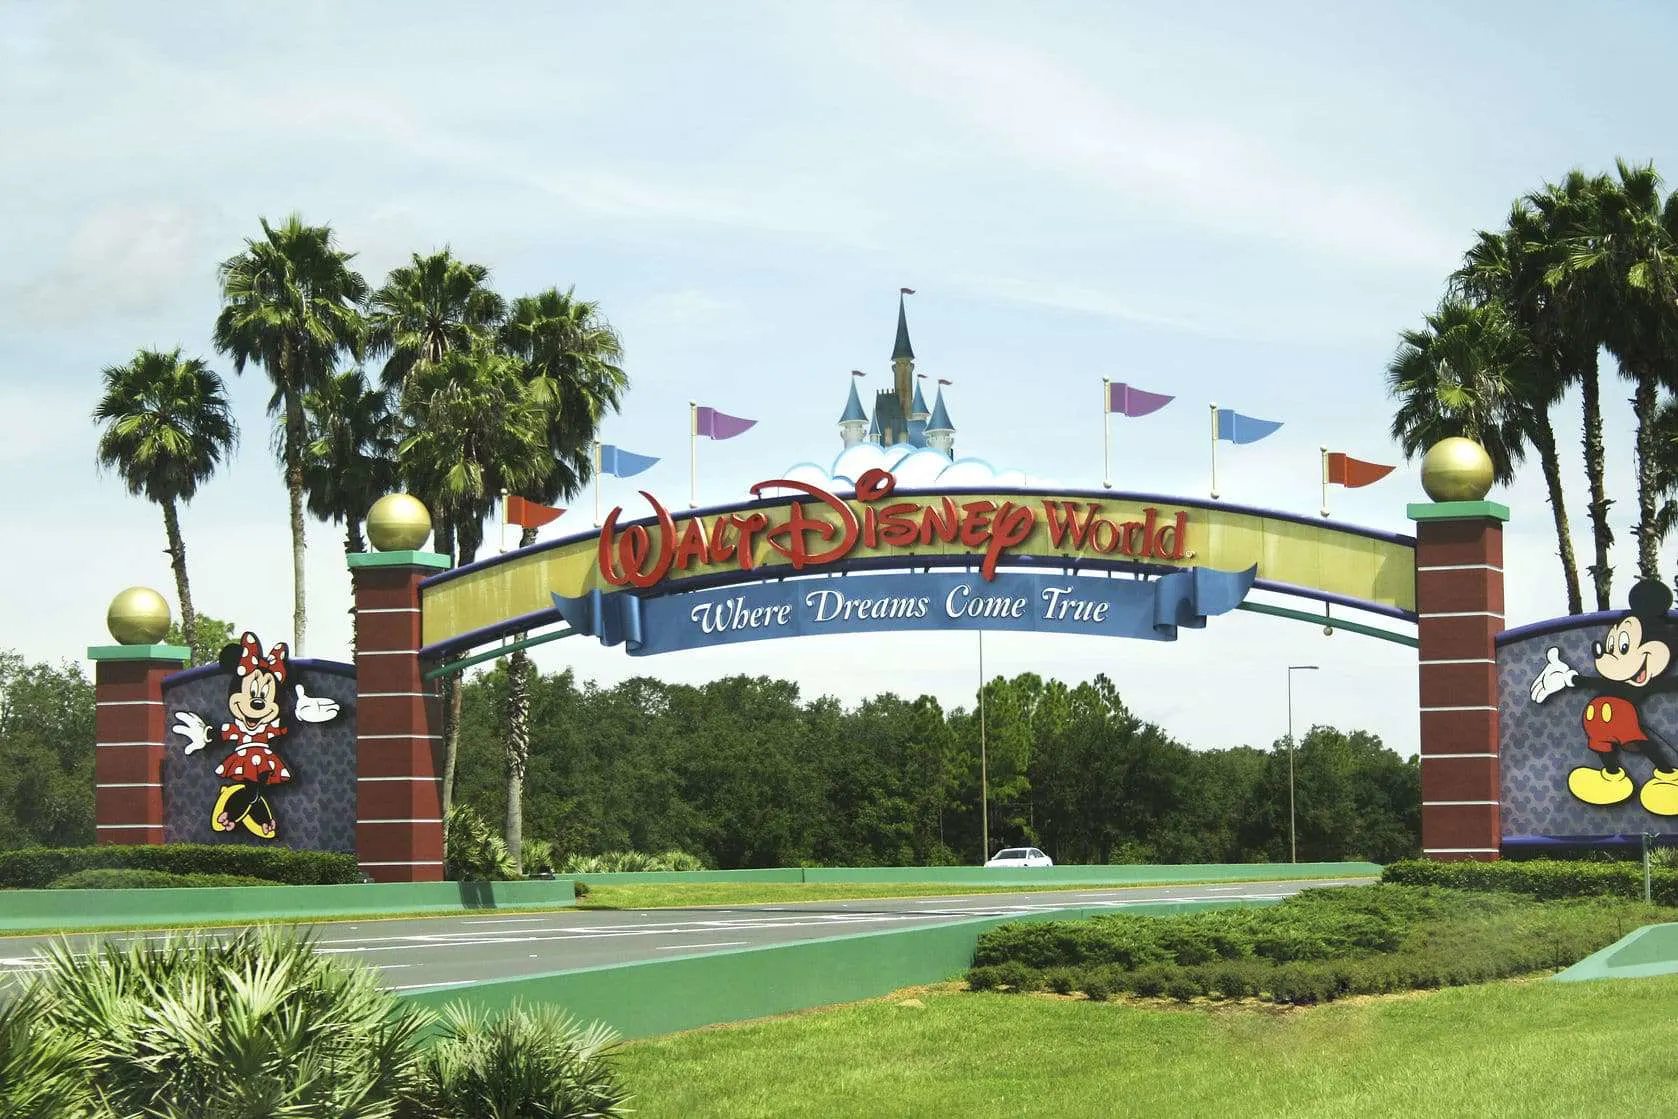 Walt Disney World Is Temporarily Closing Due To Coronavirus Concerns